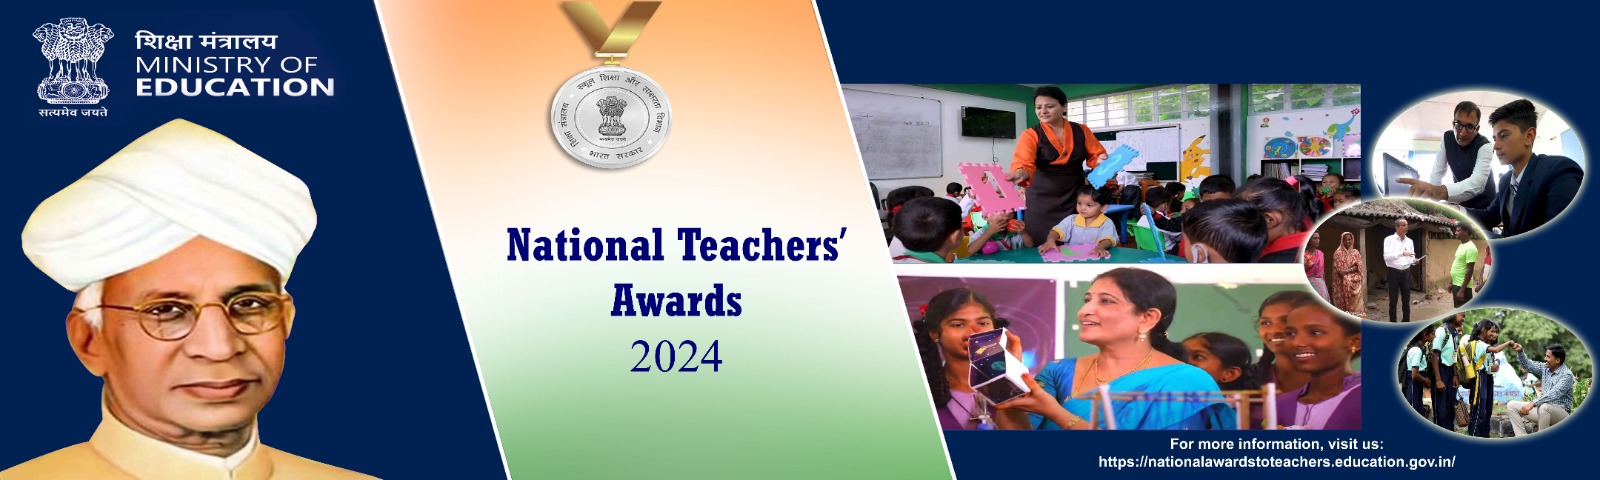 National Teachers Awards 2024